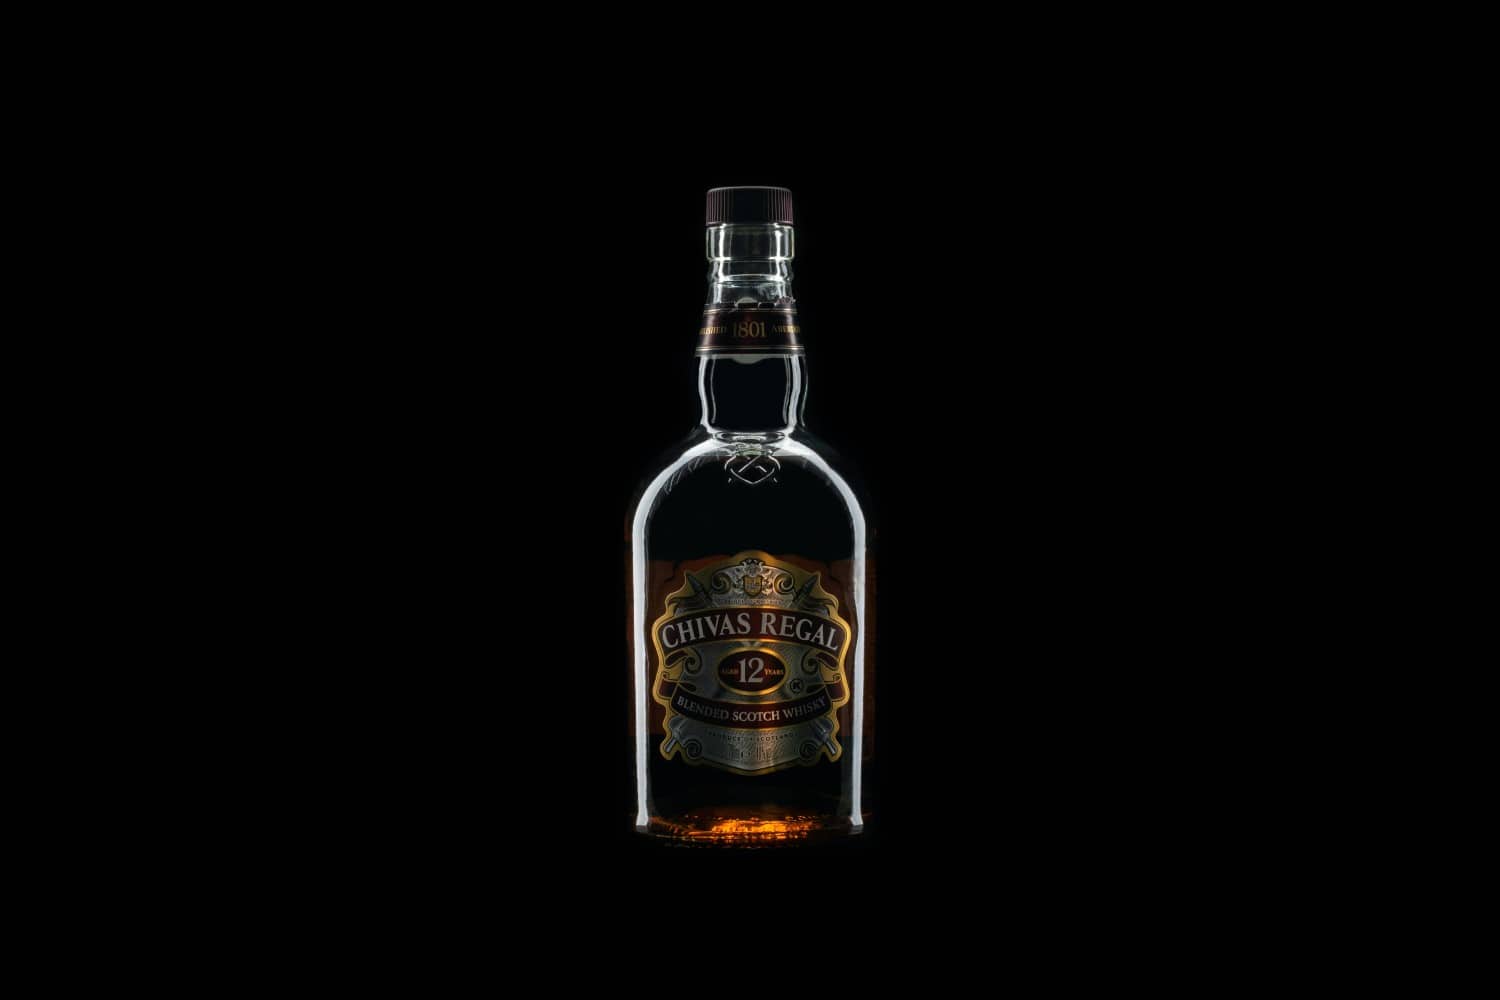 Bottle of chivas regal,a blended scotch whisky